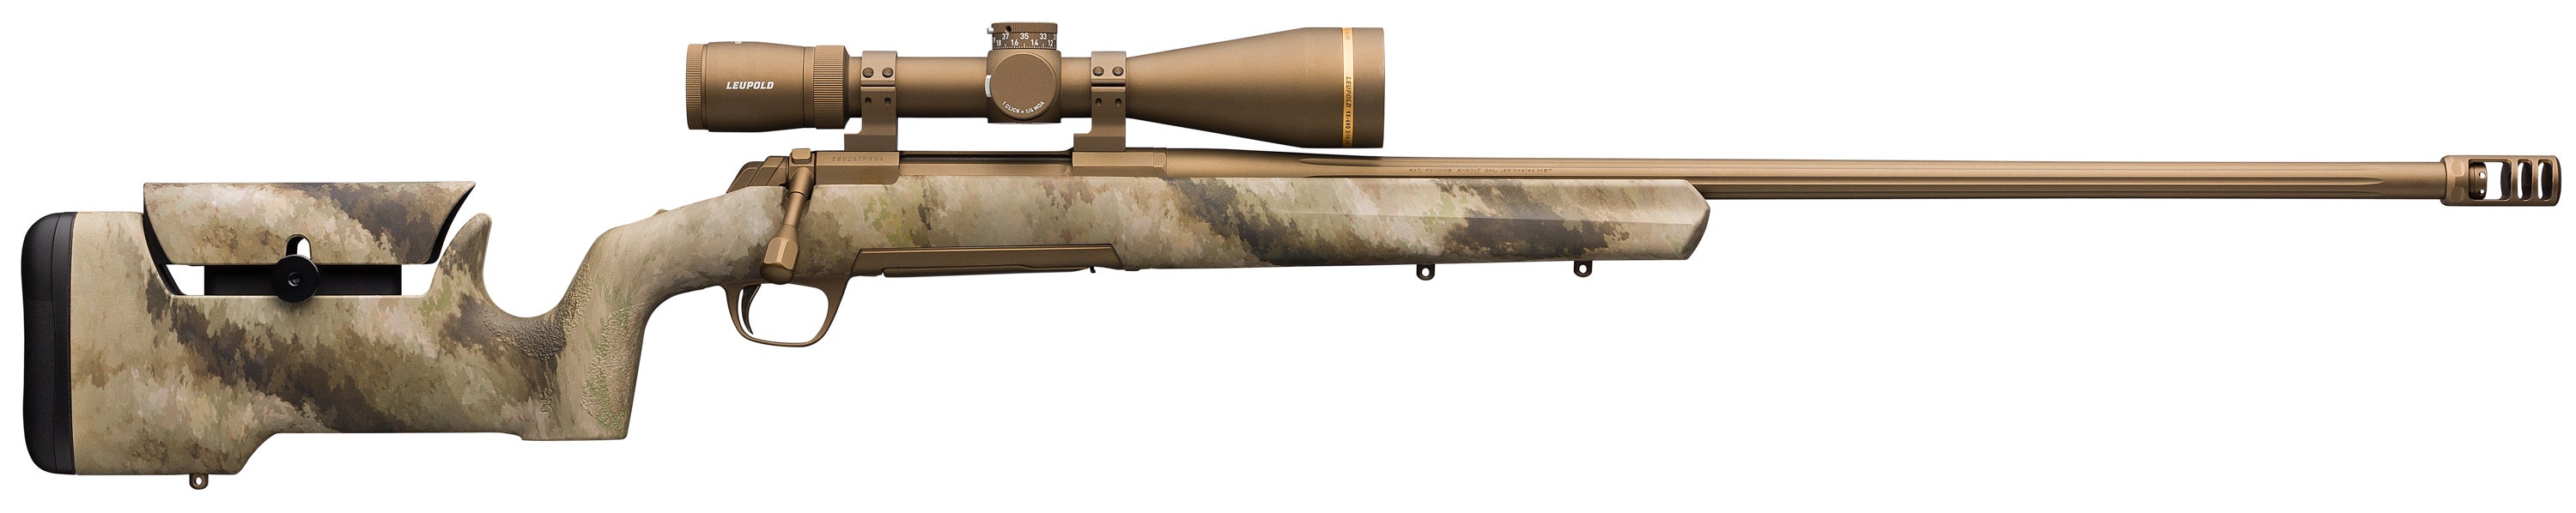 X-Bolt Hell's Canyon Max Long Range - Bolt-Action Rifle - Browning